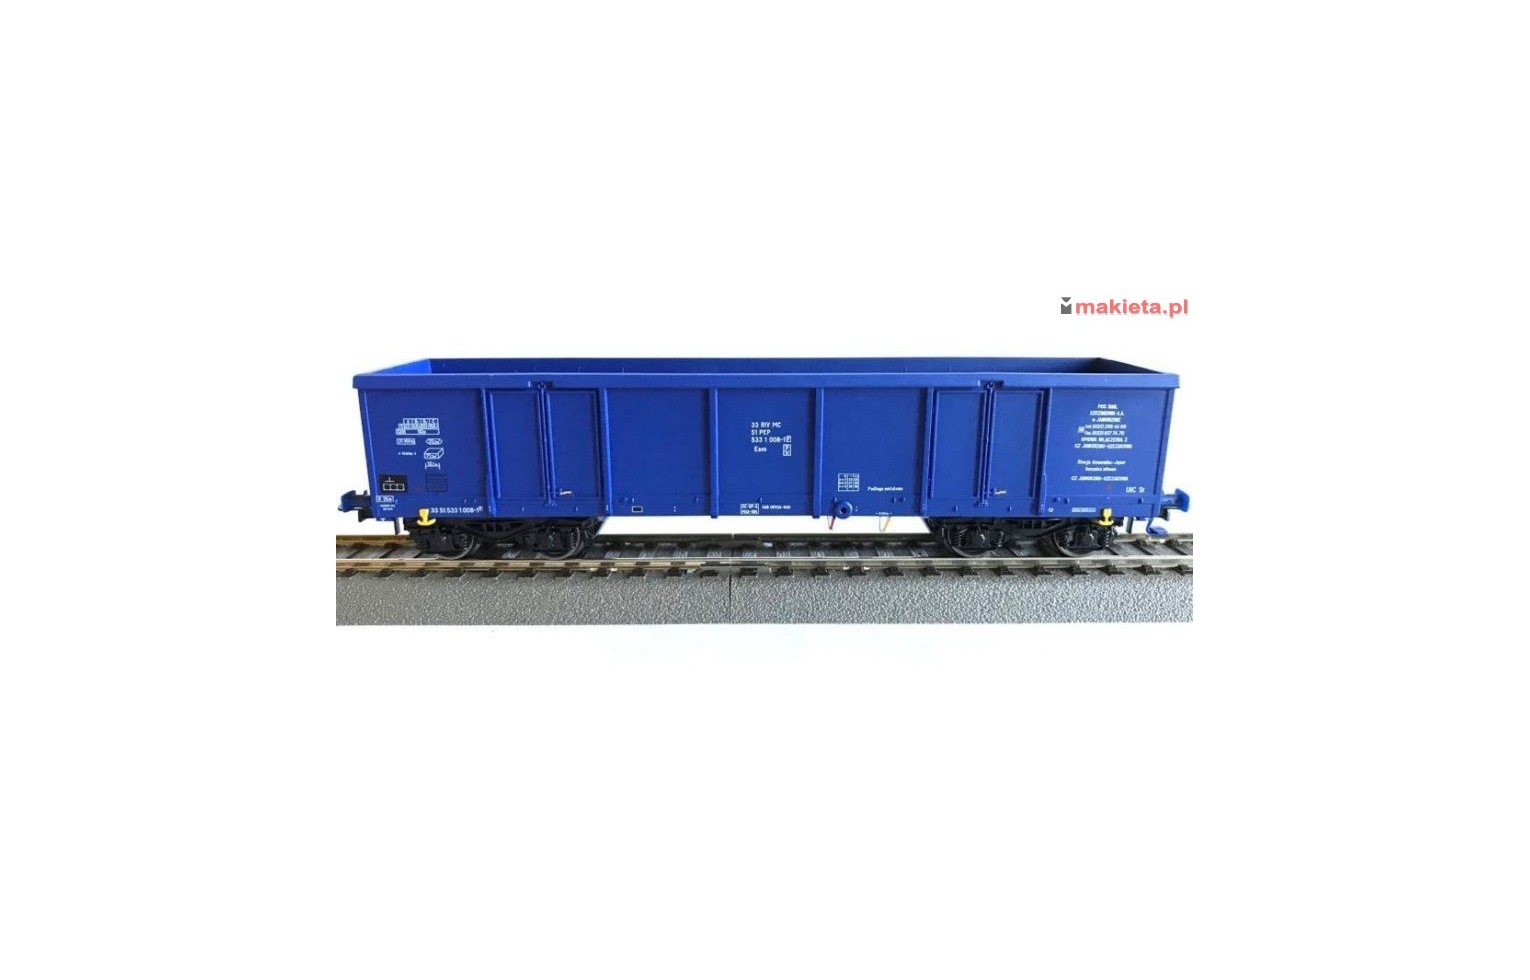 Rivarossi HRS6447, Wagon węglarka UIC, Eaos 007-3 PKP, PCC Rail Szczakowa S.A., ep.Vc-VIa, skala H0.